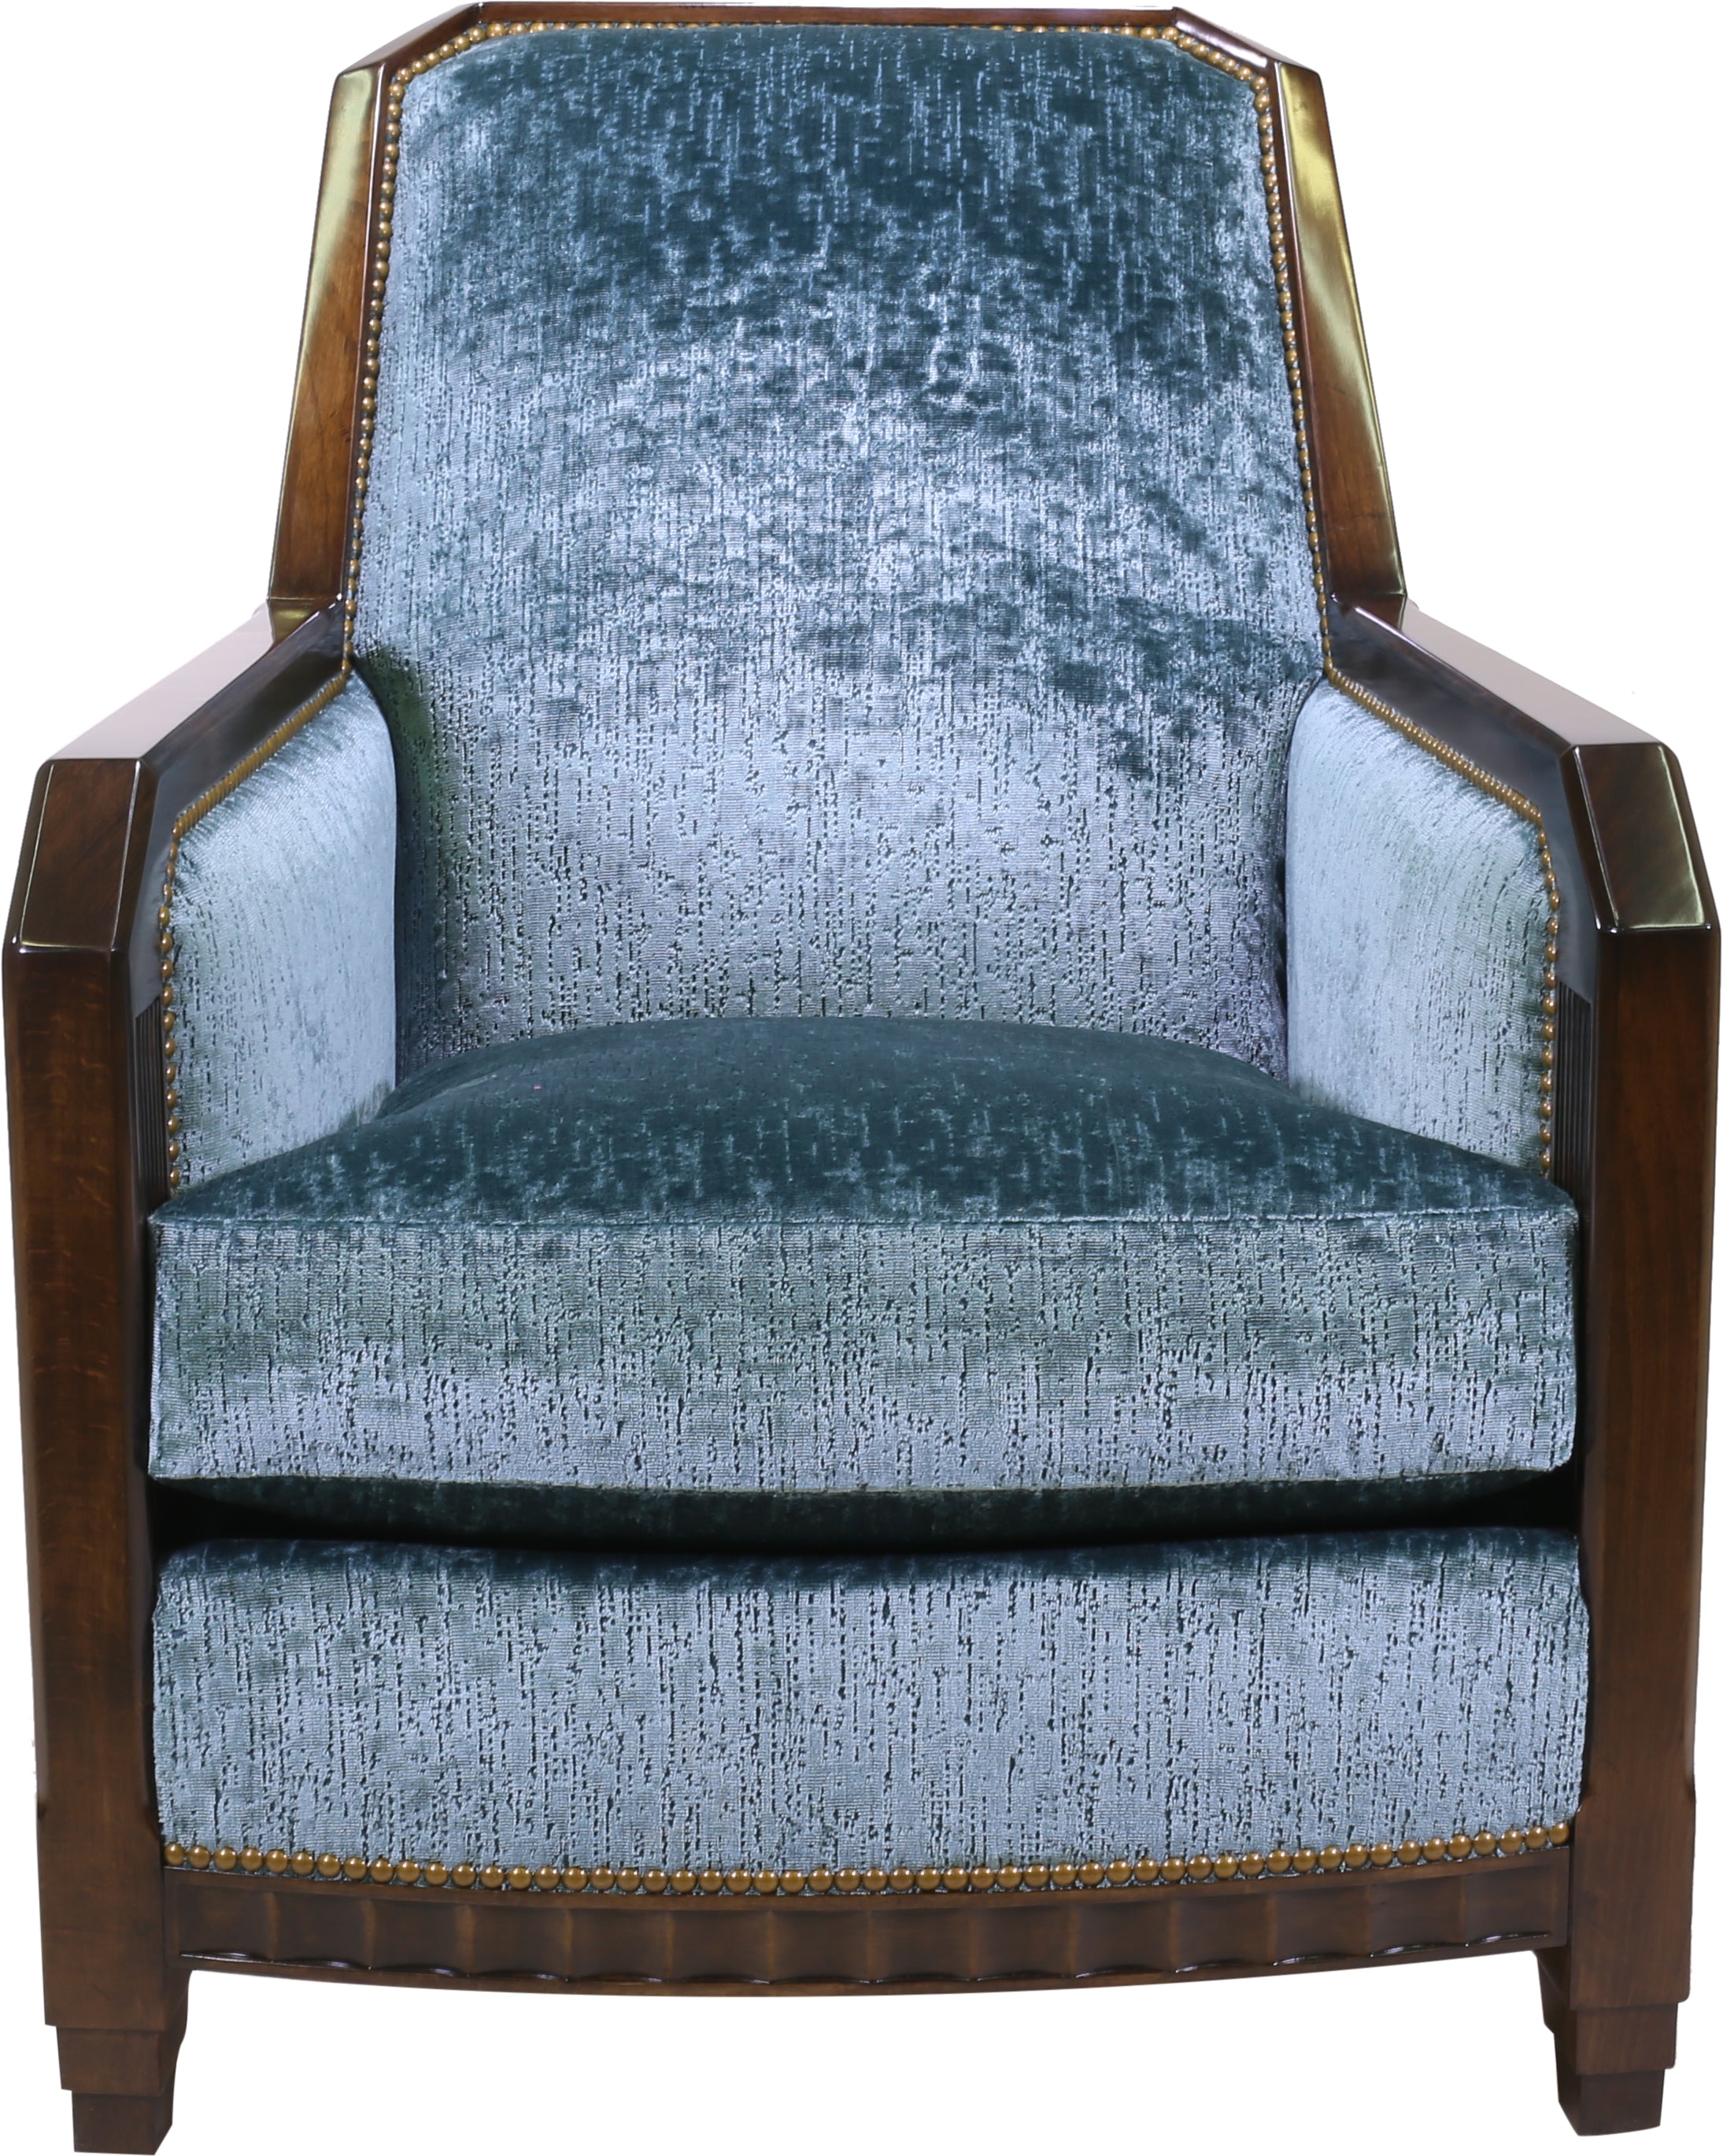 R.M.S. Art Deco Lounge Chair – William Switzer